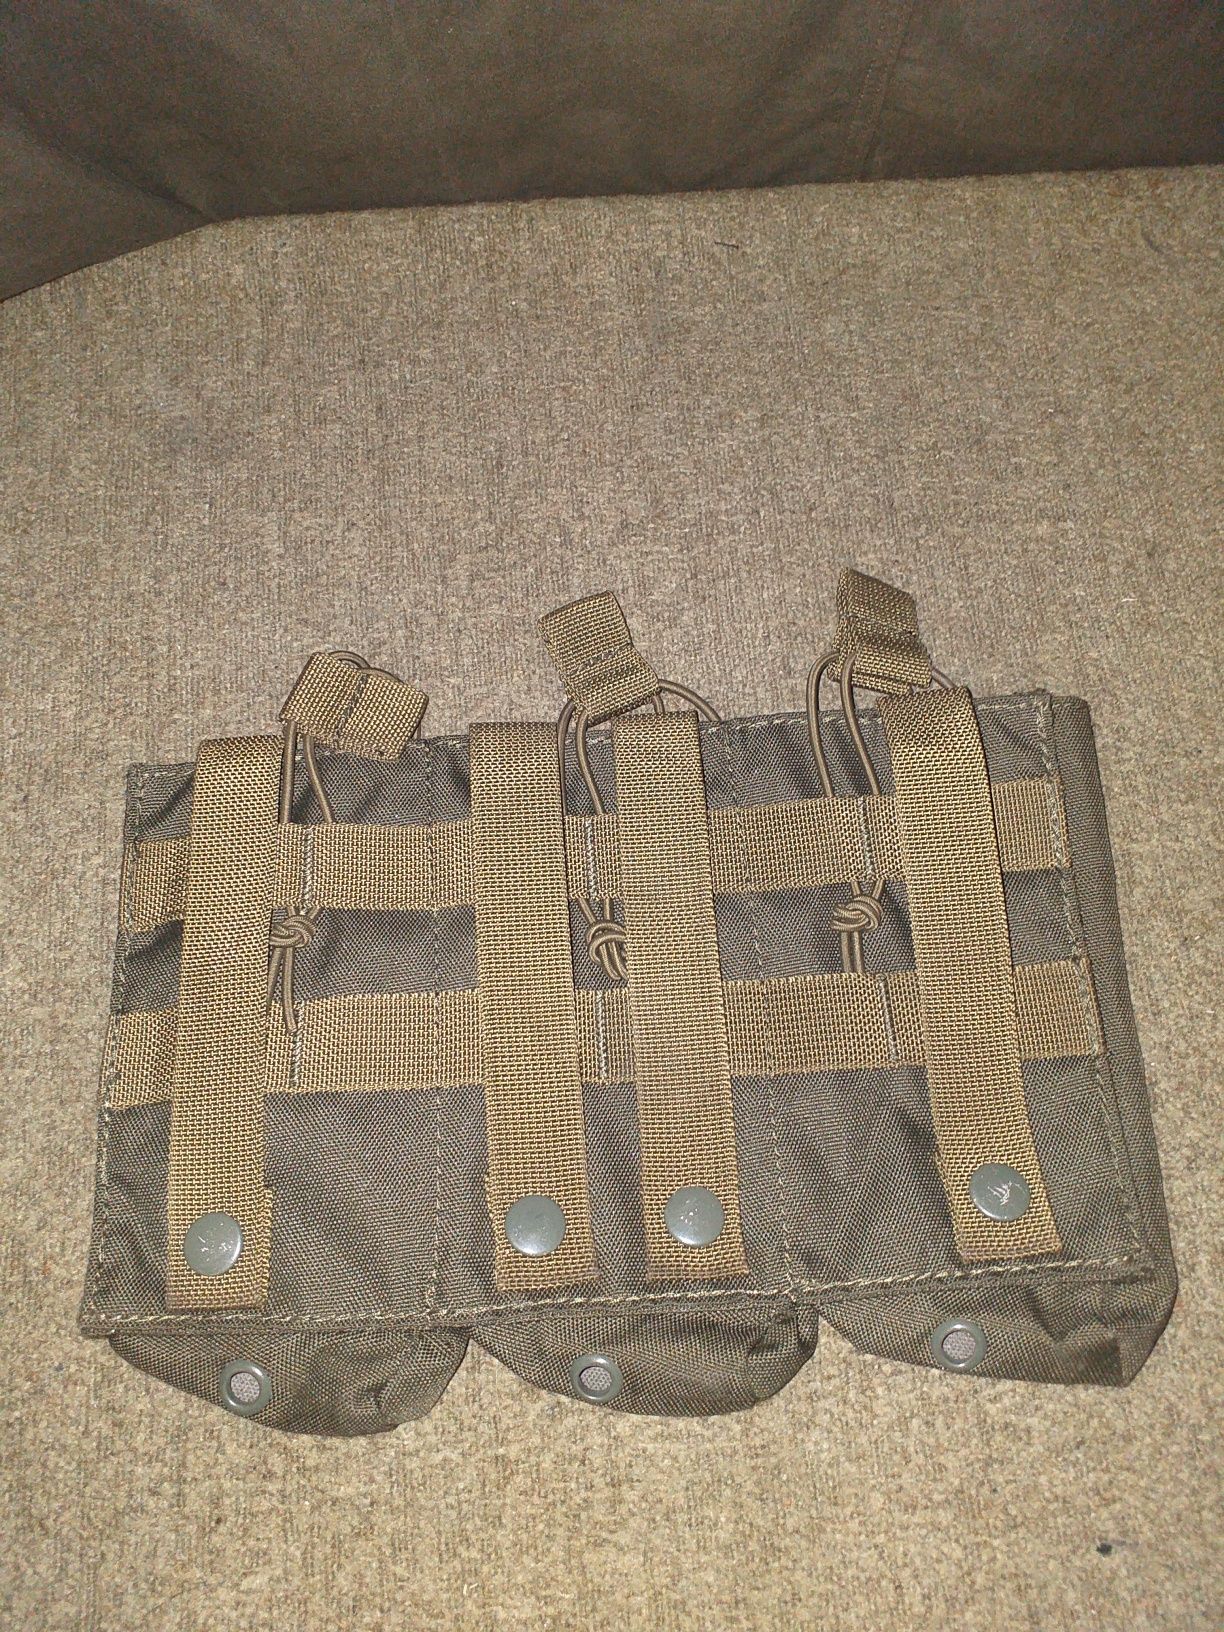 Potrójna ładownica na magazynki AK,M4,M16,militaria,olive,ASG,Paintbal